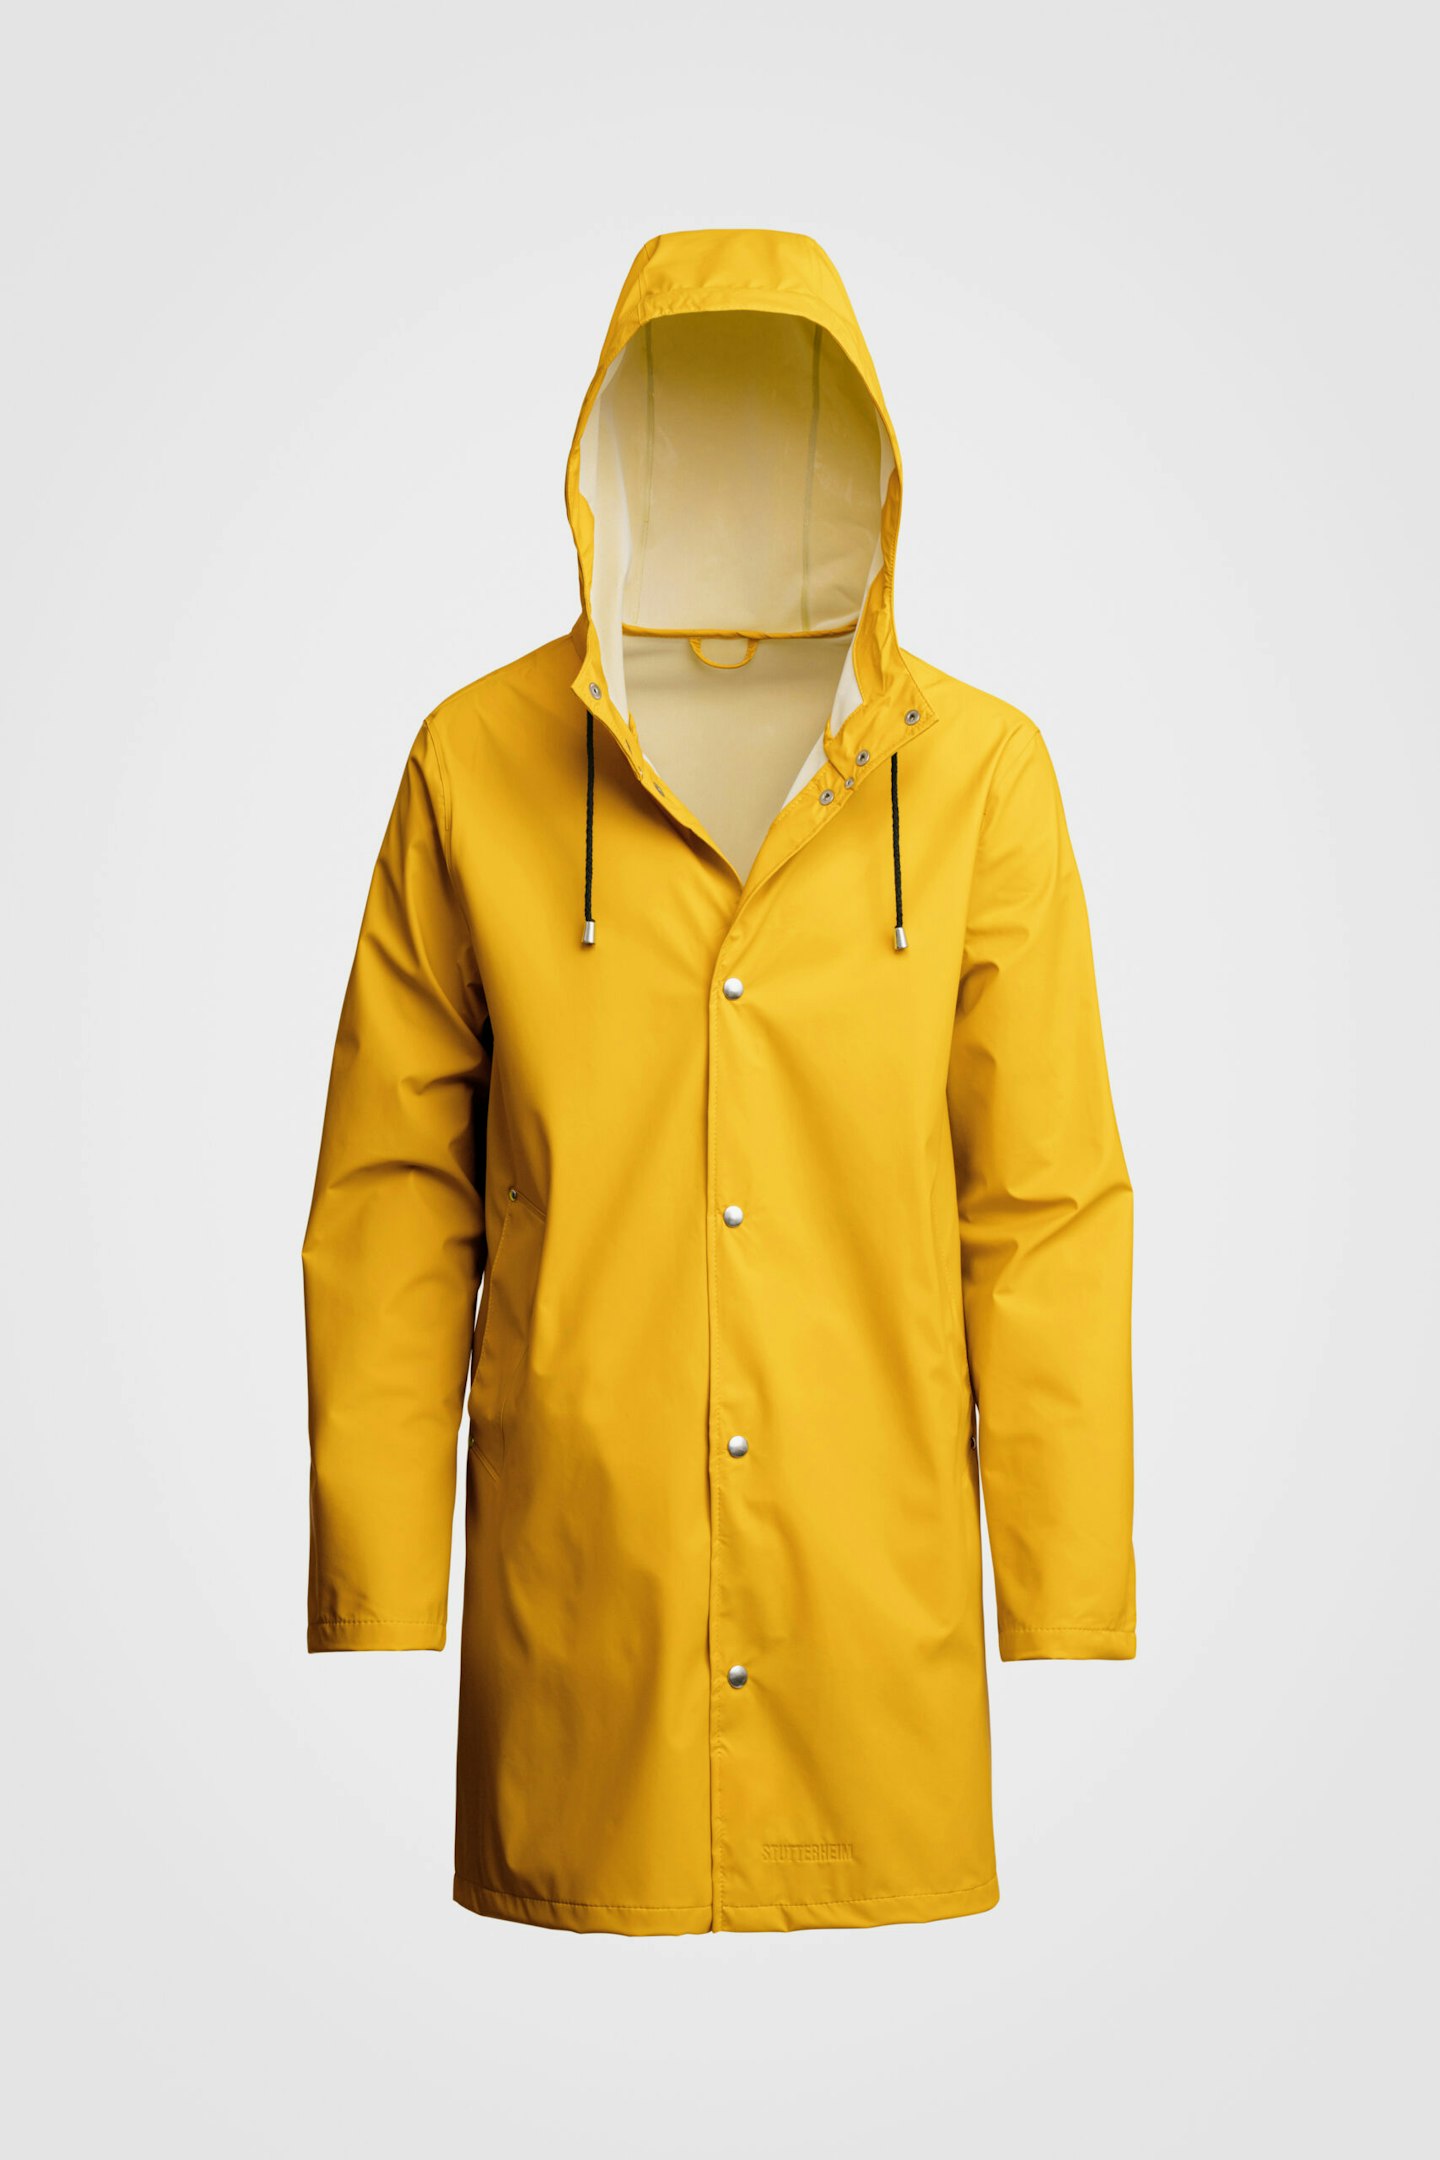 Stutterheim, Stockholm Lightweight Raincoat